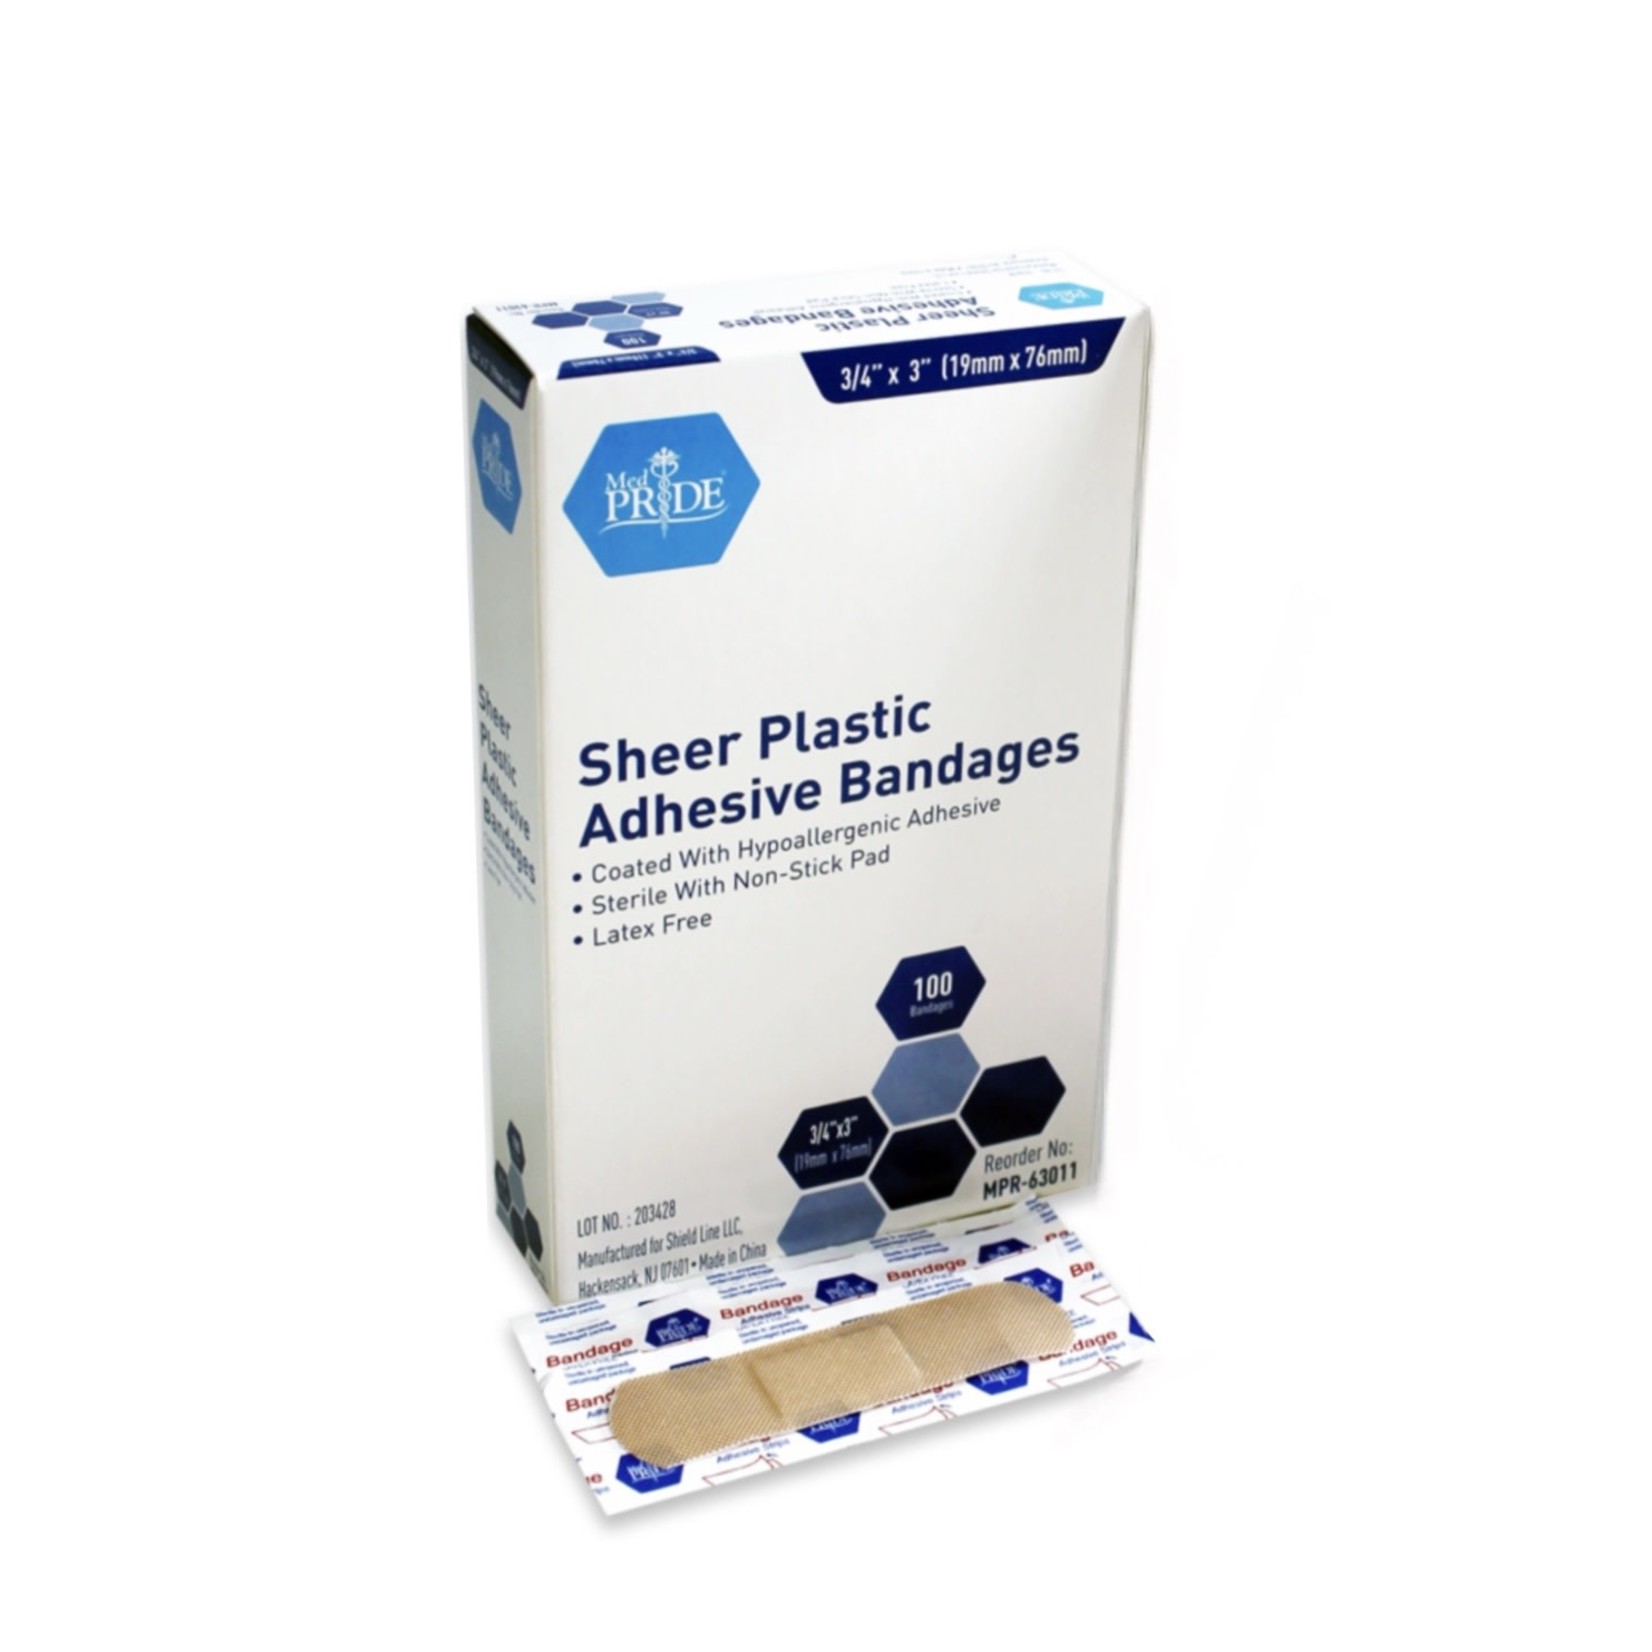 MPR-63011 - Adhesive Bandage-Sheer- 3/4" x 3", Sterile - 100/box | 24/cs